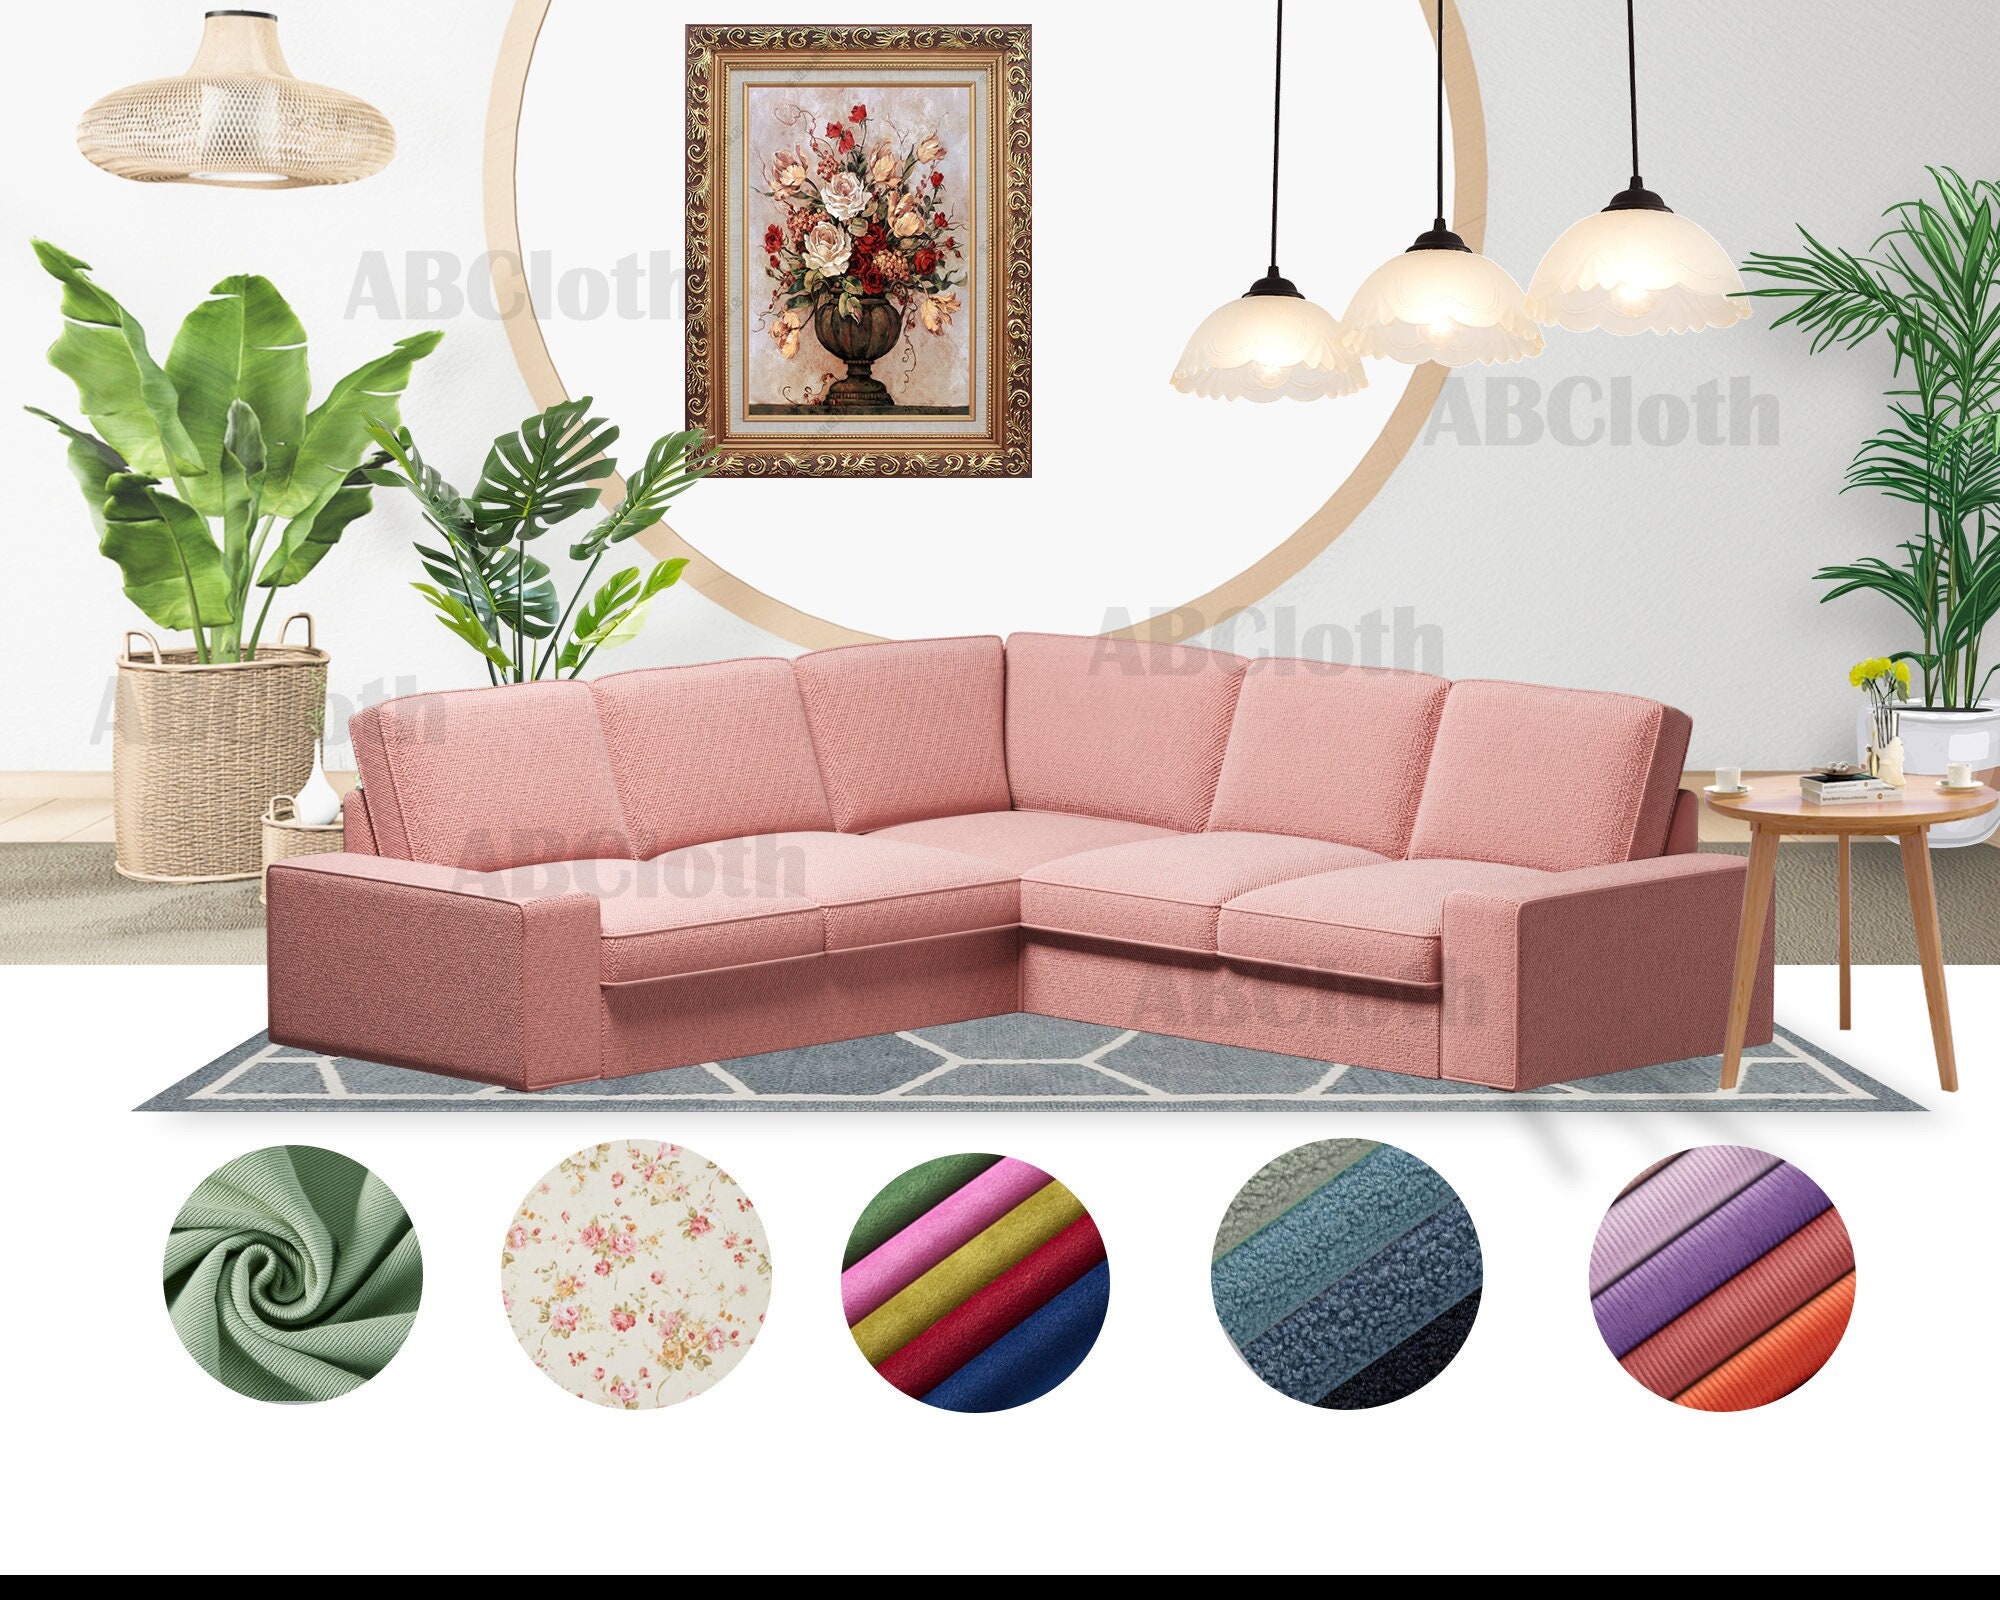 Lovesac - Sactional Covers  Modular Sectional Sofa Covers